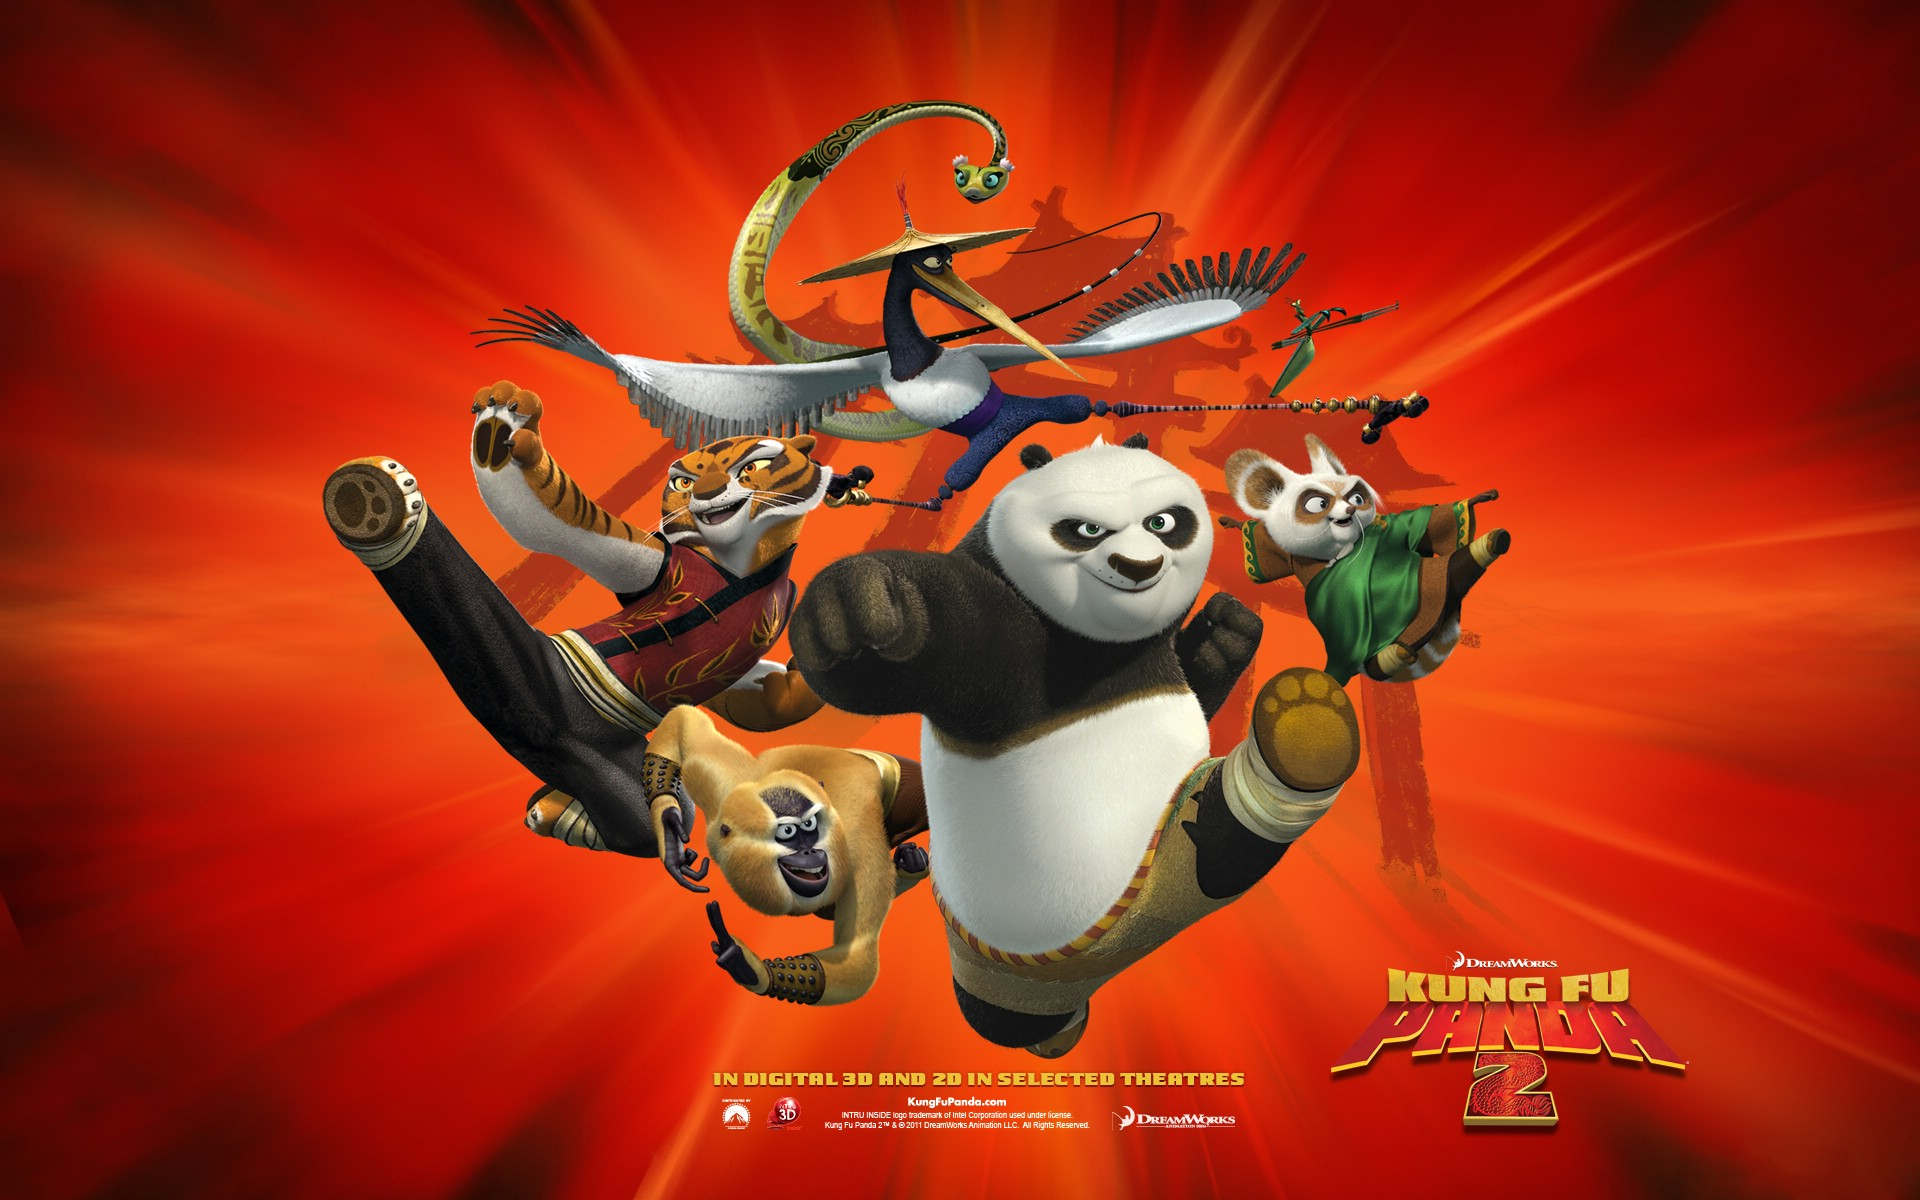 Monkey (Kung Fu Panda) wallpaper for desktop, download free Monkey (Kung Fu Panda) picture and background for PC